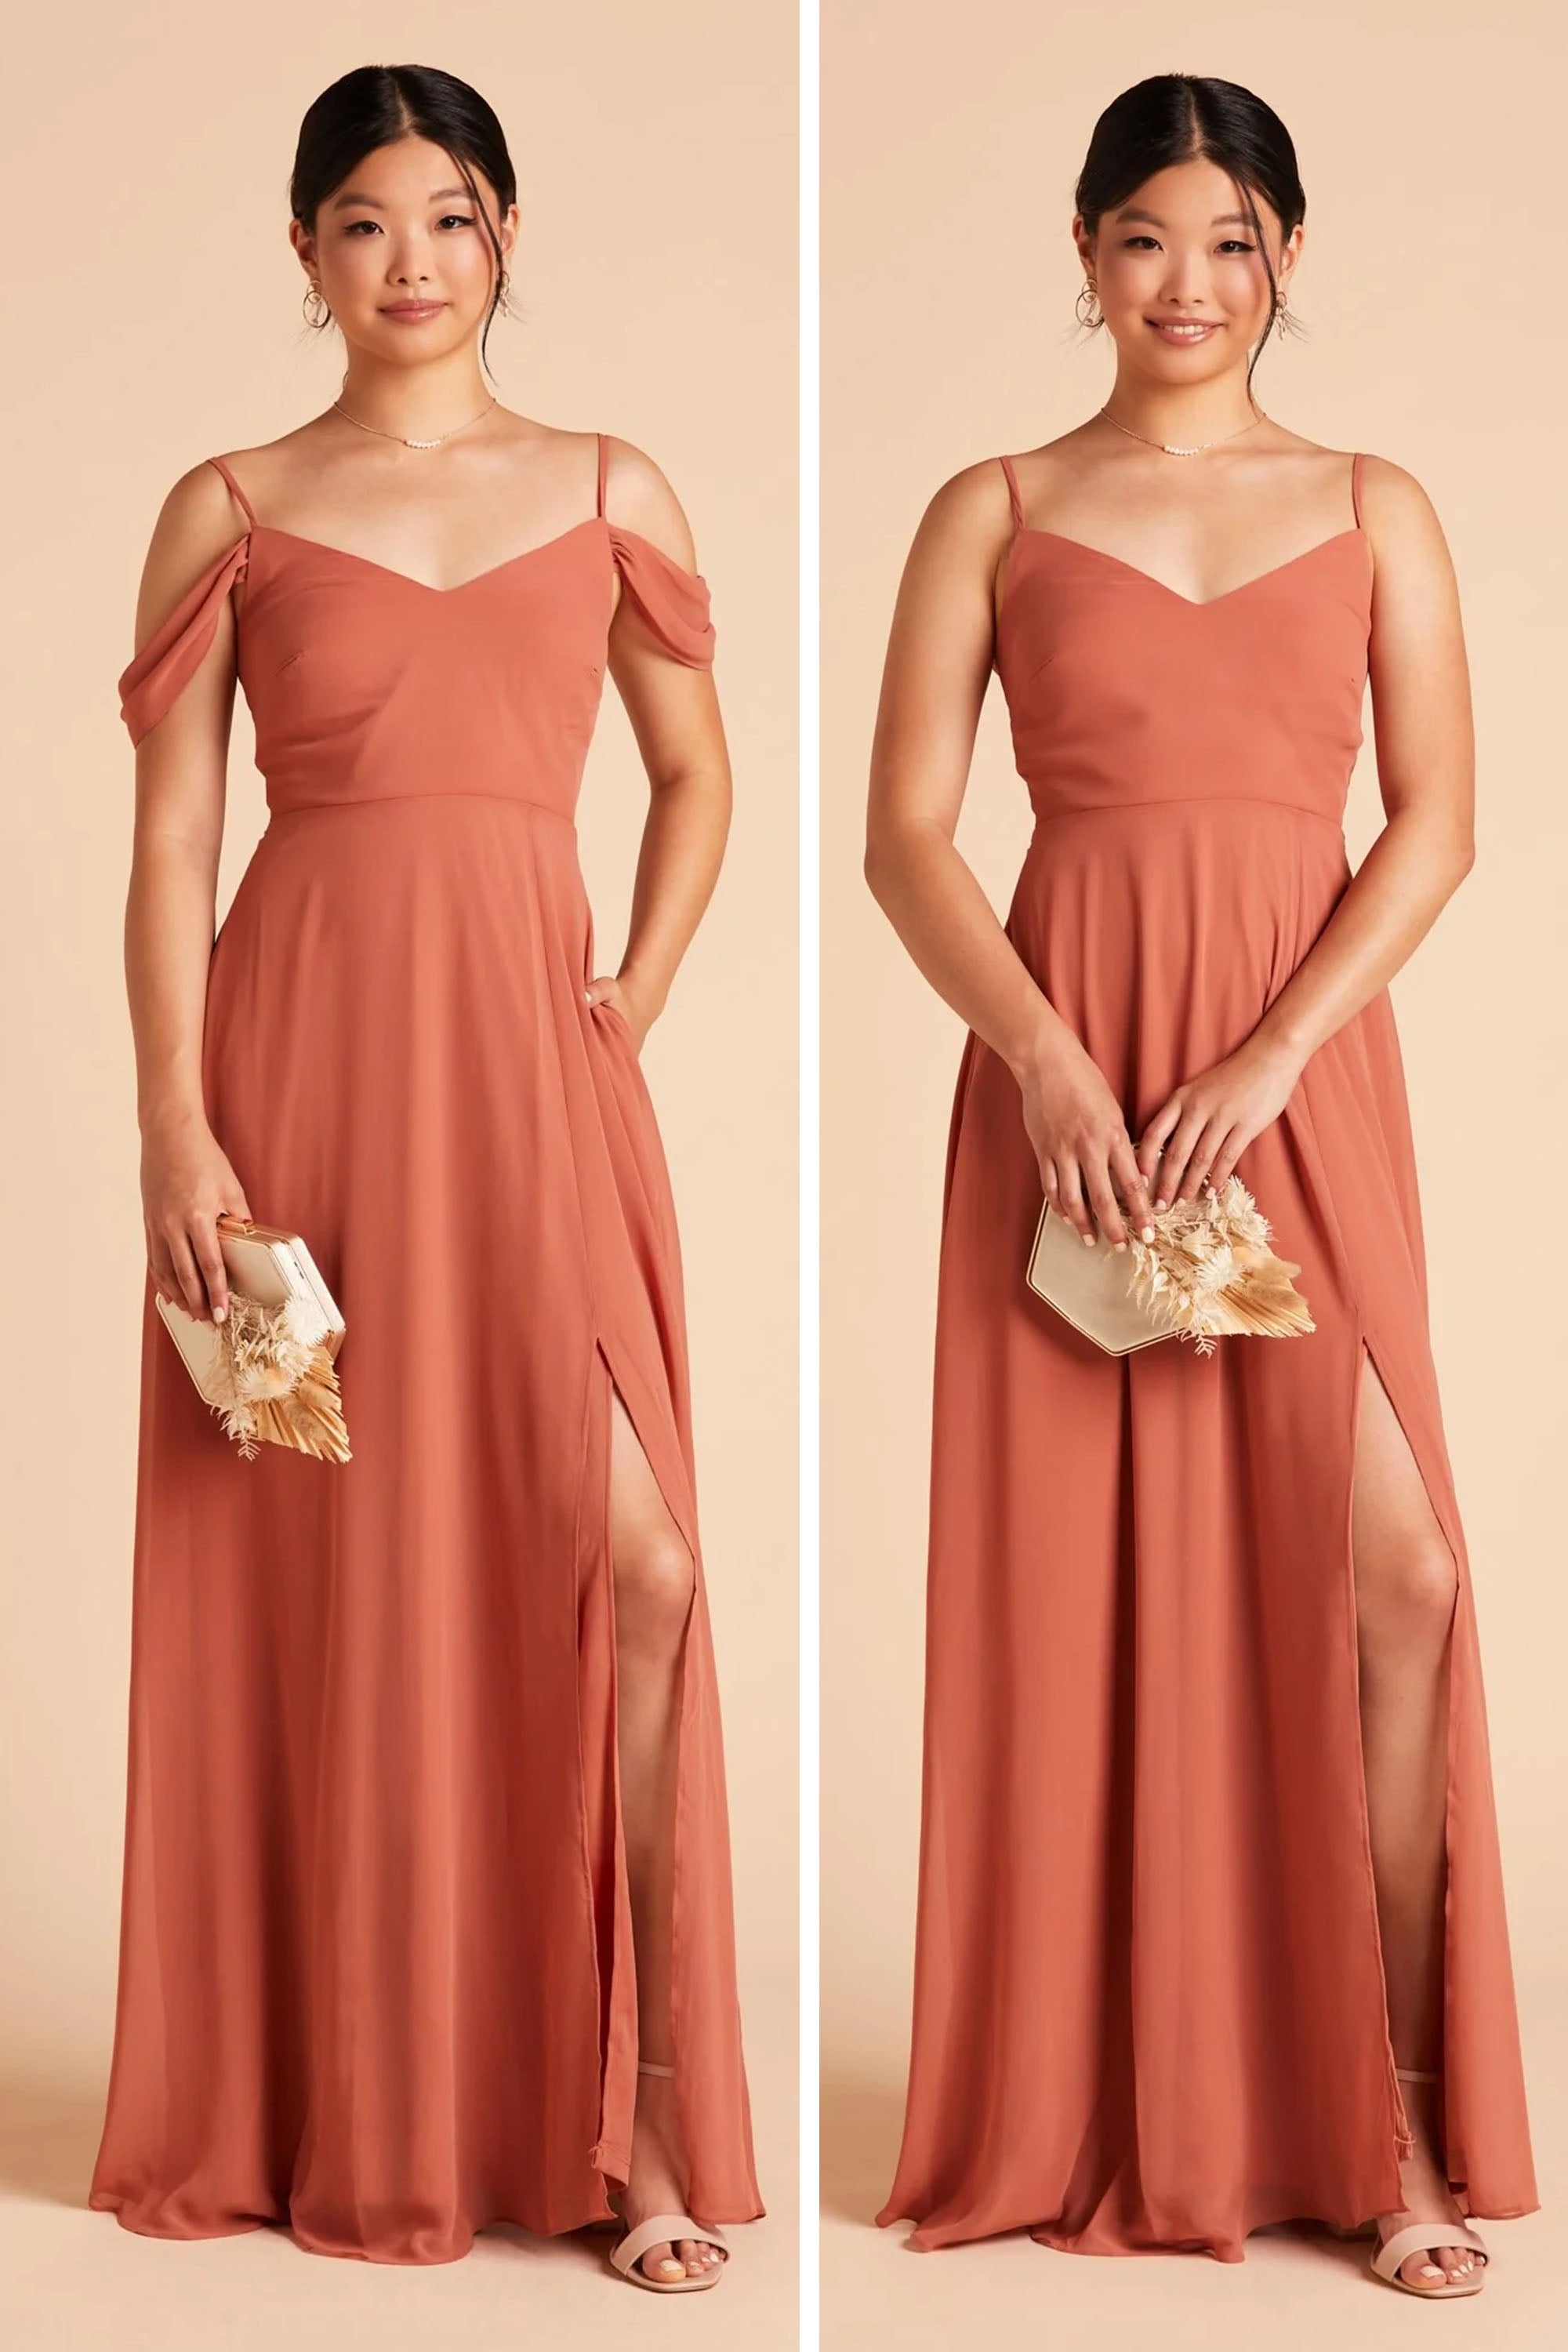 Marigold Le Fleur Devin Convertible Dress by Birdy Grey